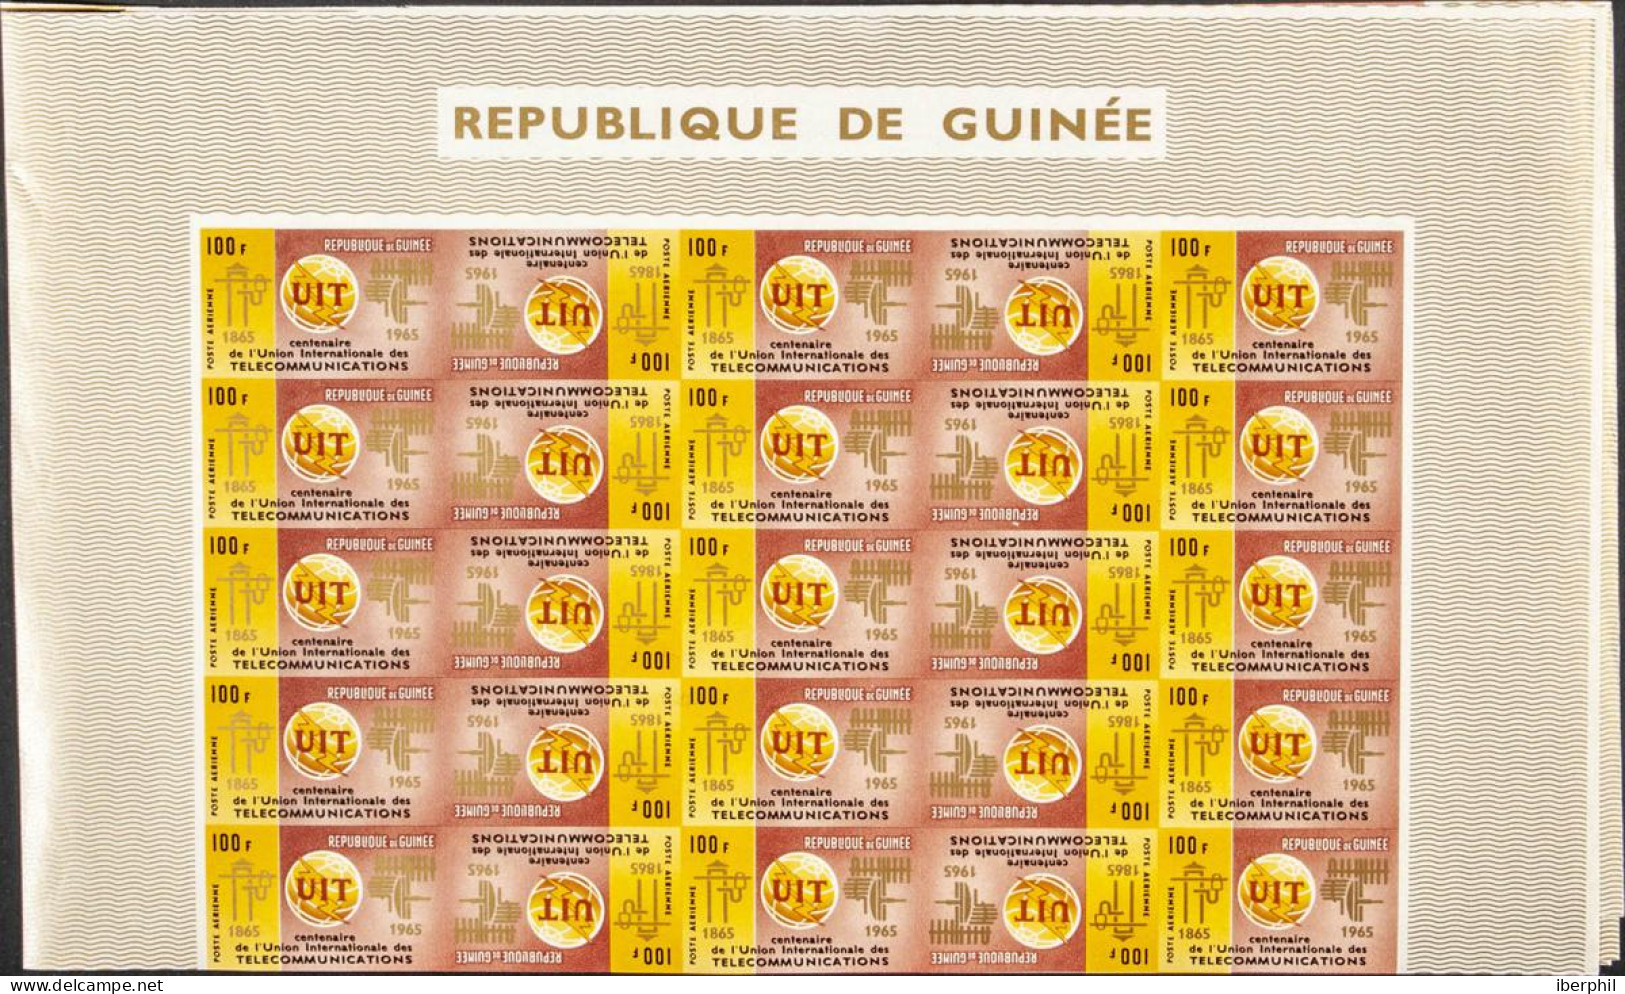 Guinea (Republic)